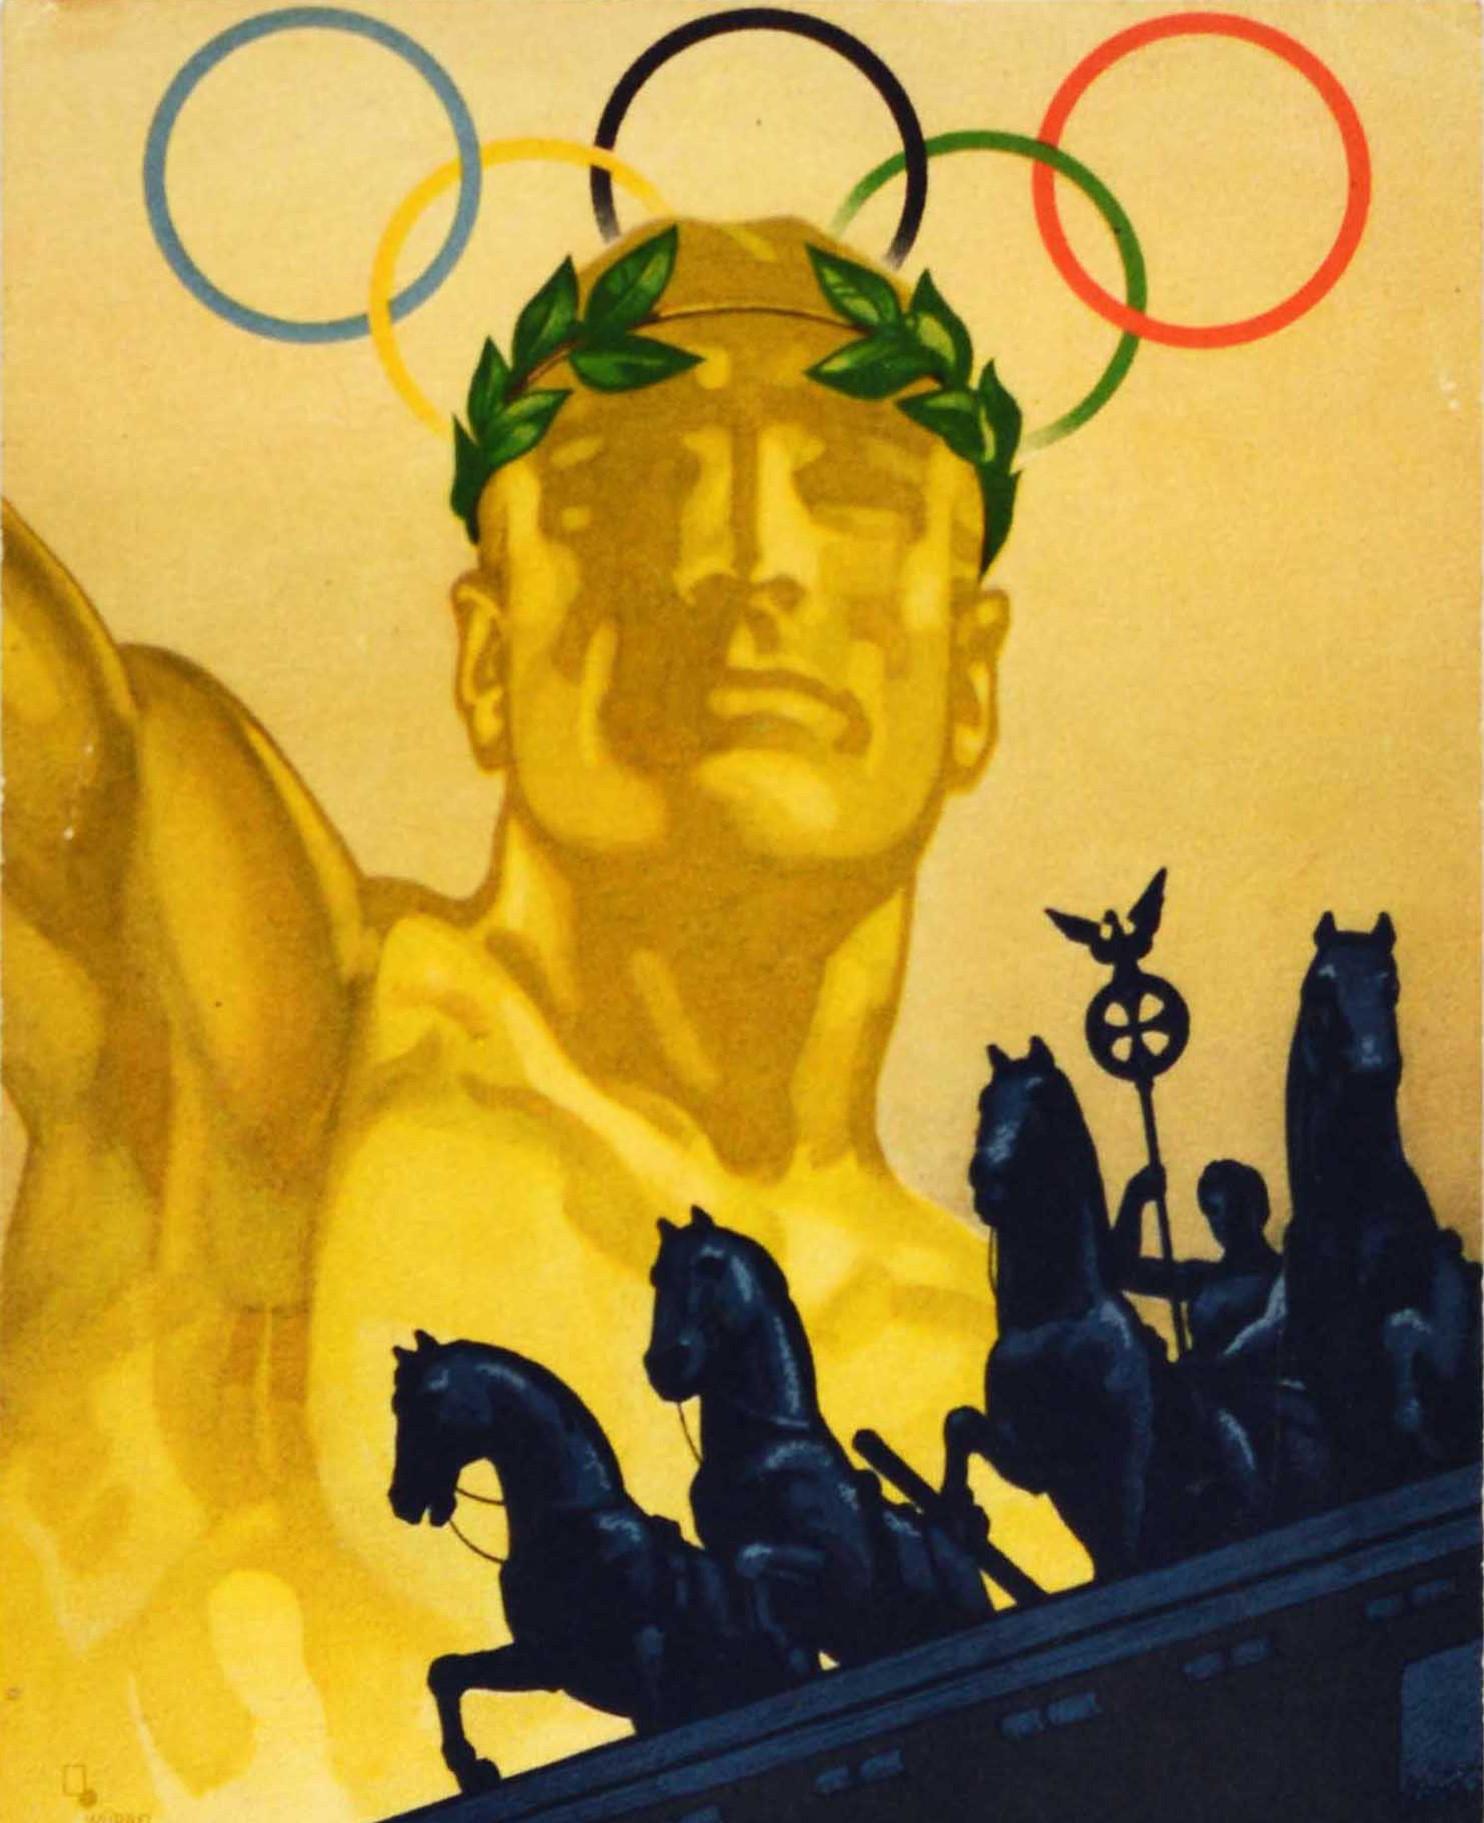 Original Vintage Olympic Games Poster - 1936 Berlin Olympics - Brandenburg Gate - Yellow Print by Franz Würbel